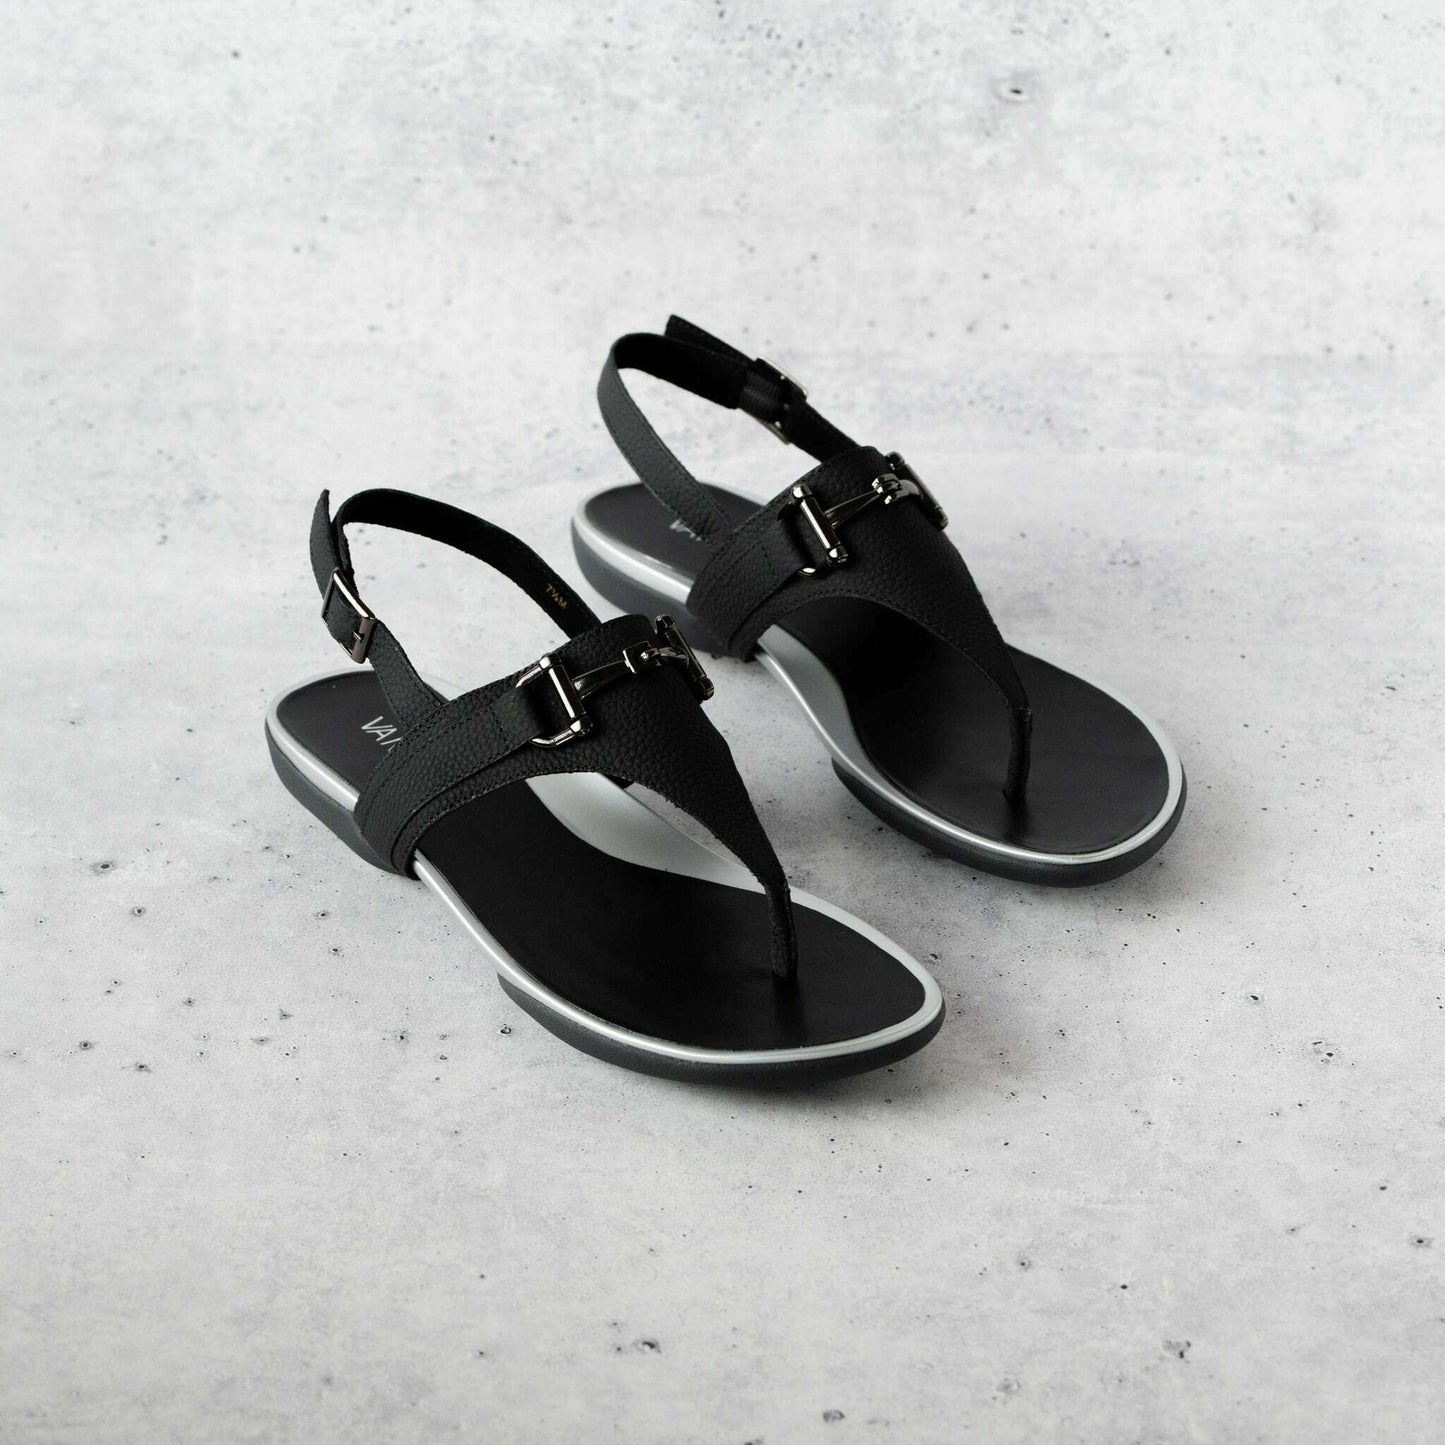 VANELi - Walk - Black or White, Sandals, Van Eli, Plum Bottom